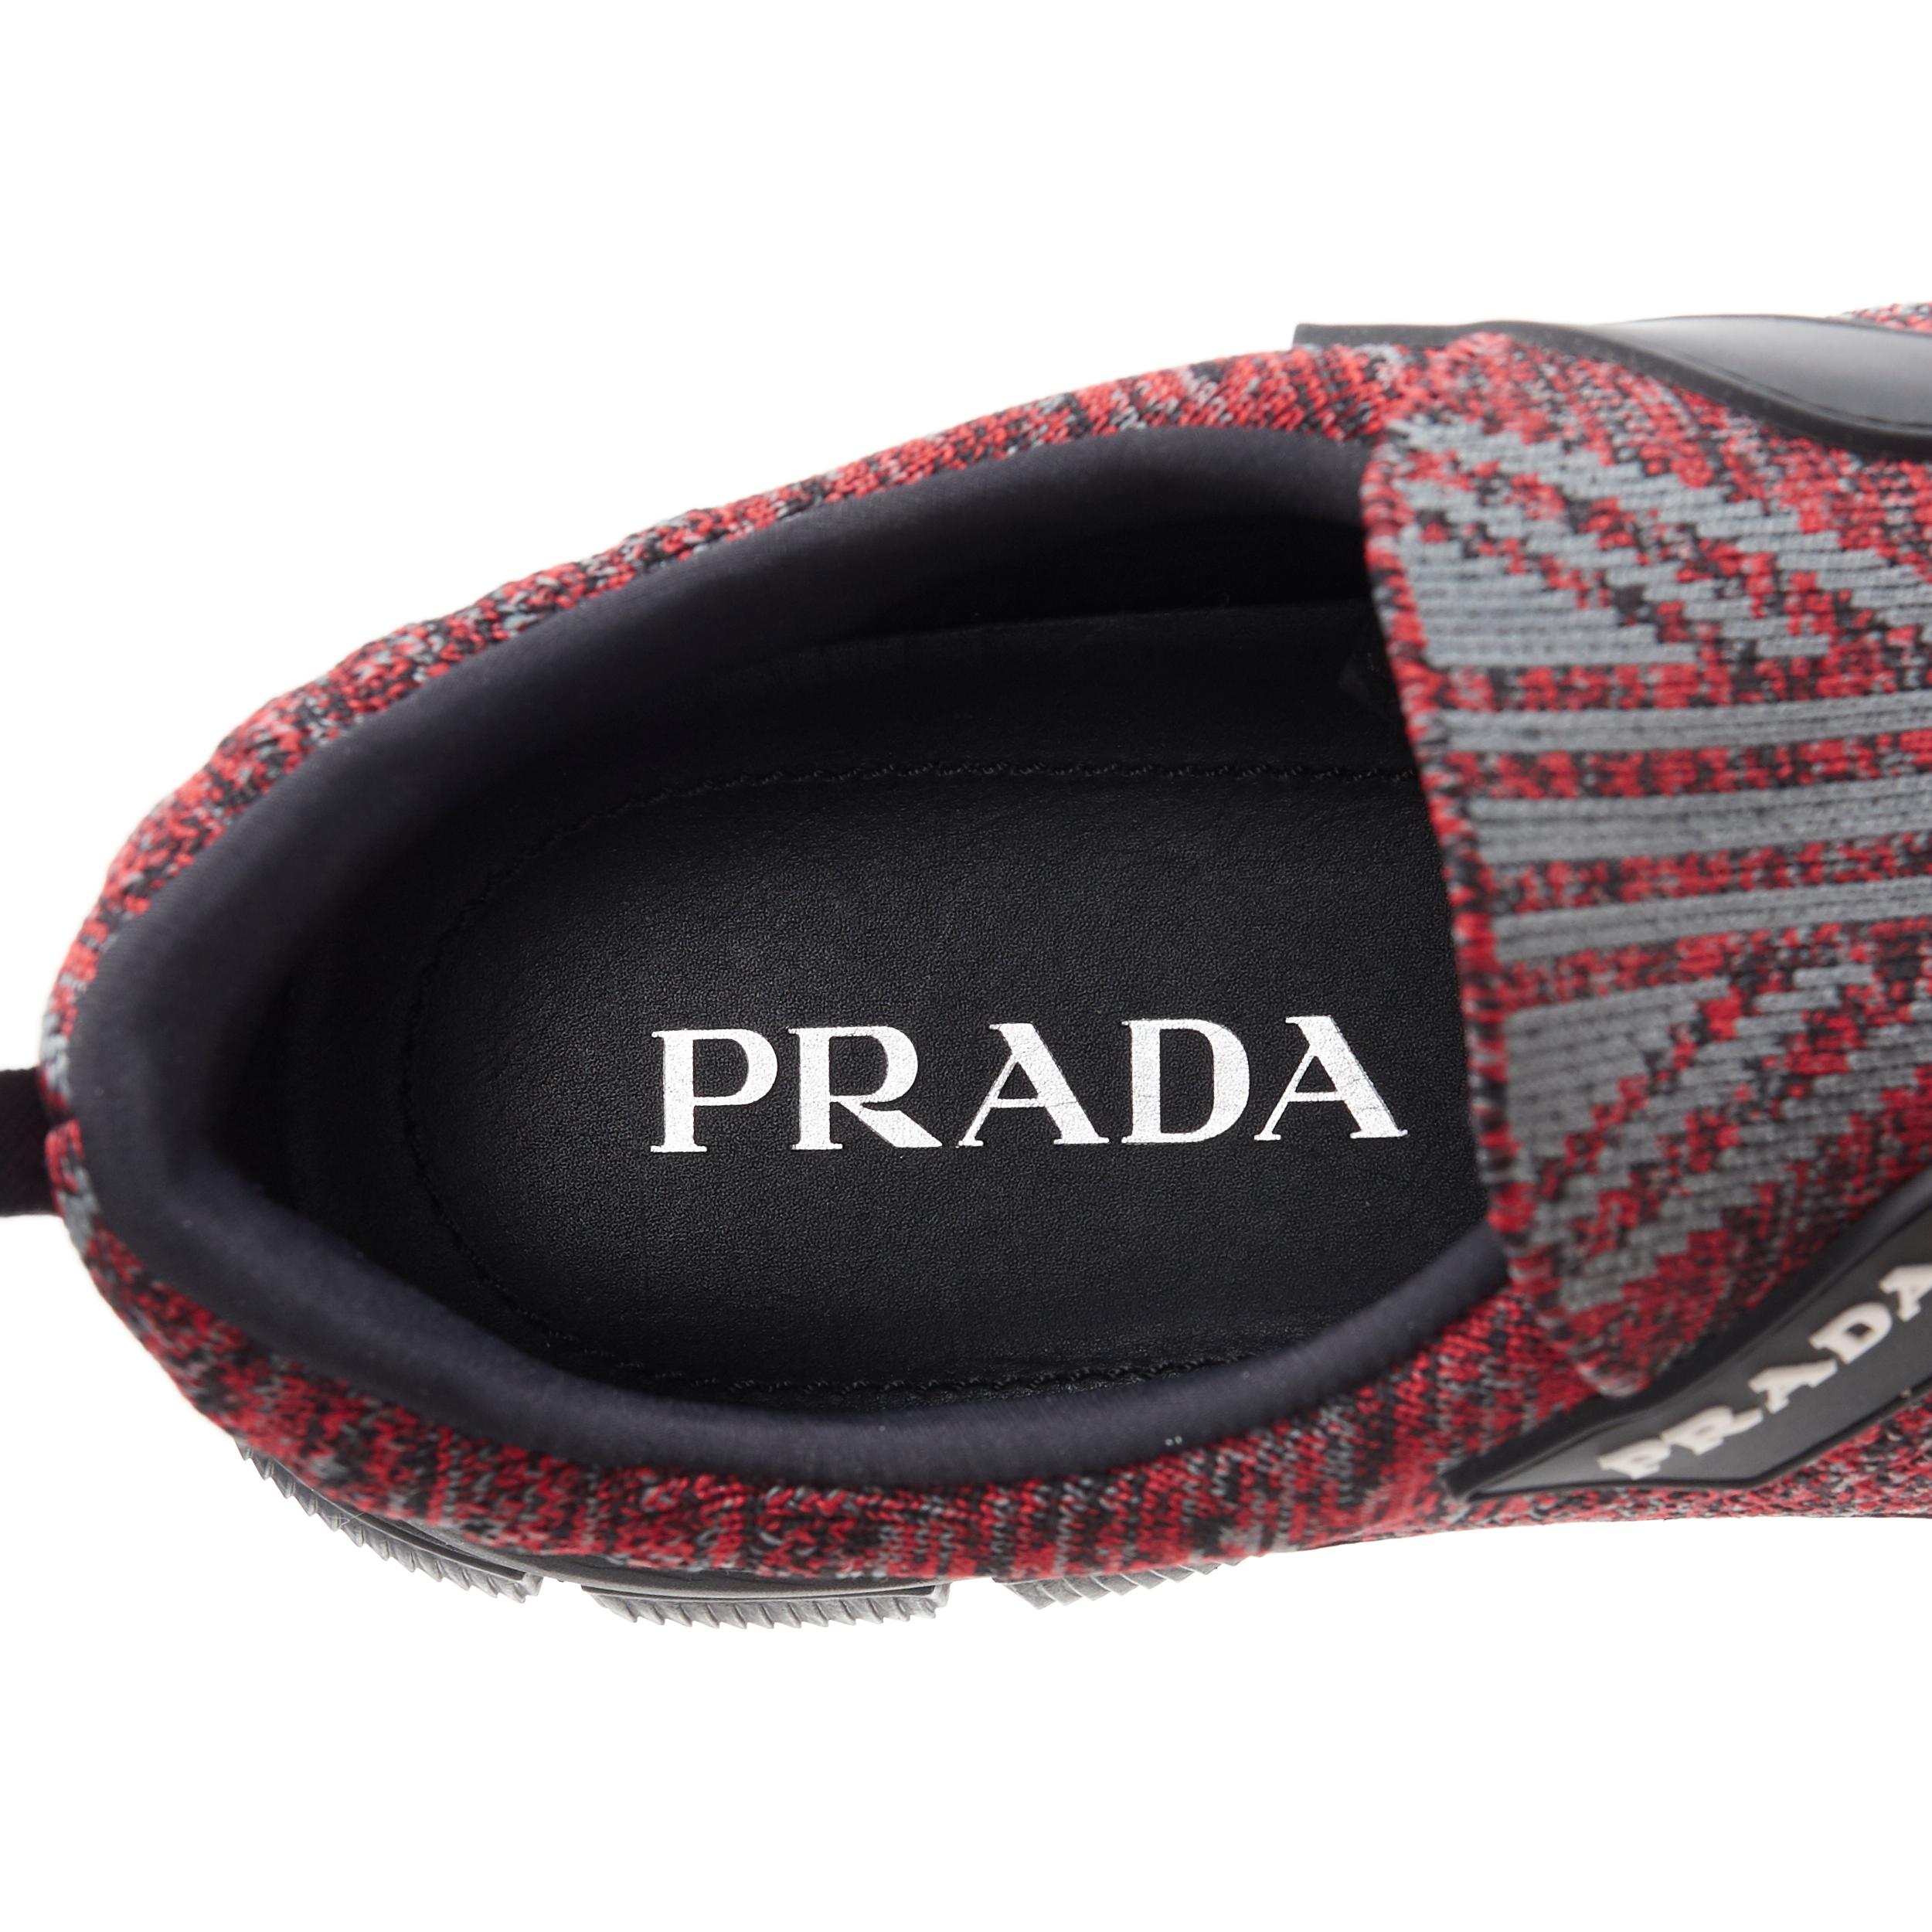 new PRADA Crossection Knit Low red black sock low runner sneakers UK6 US7 EU39 4